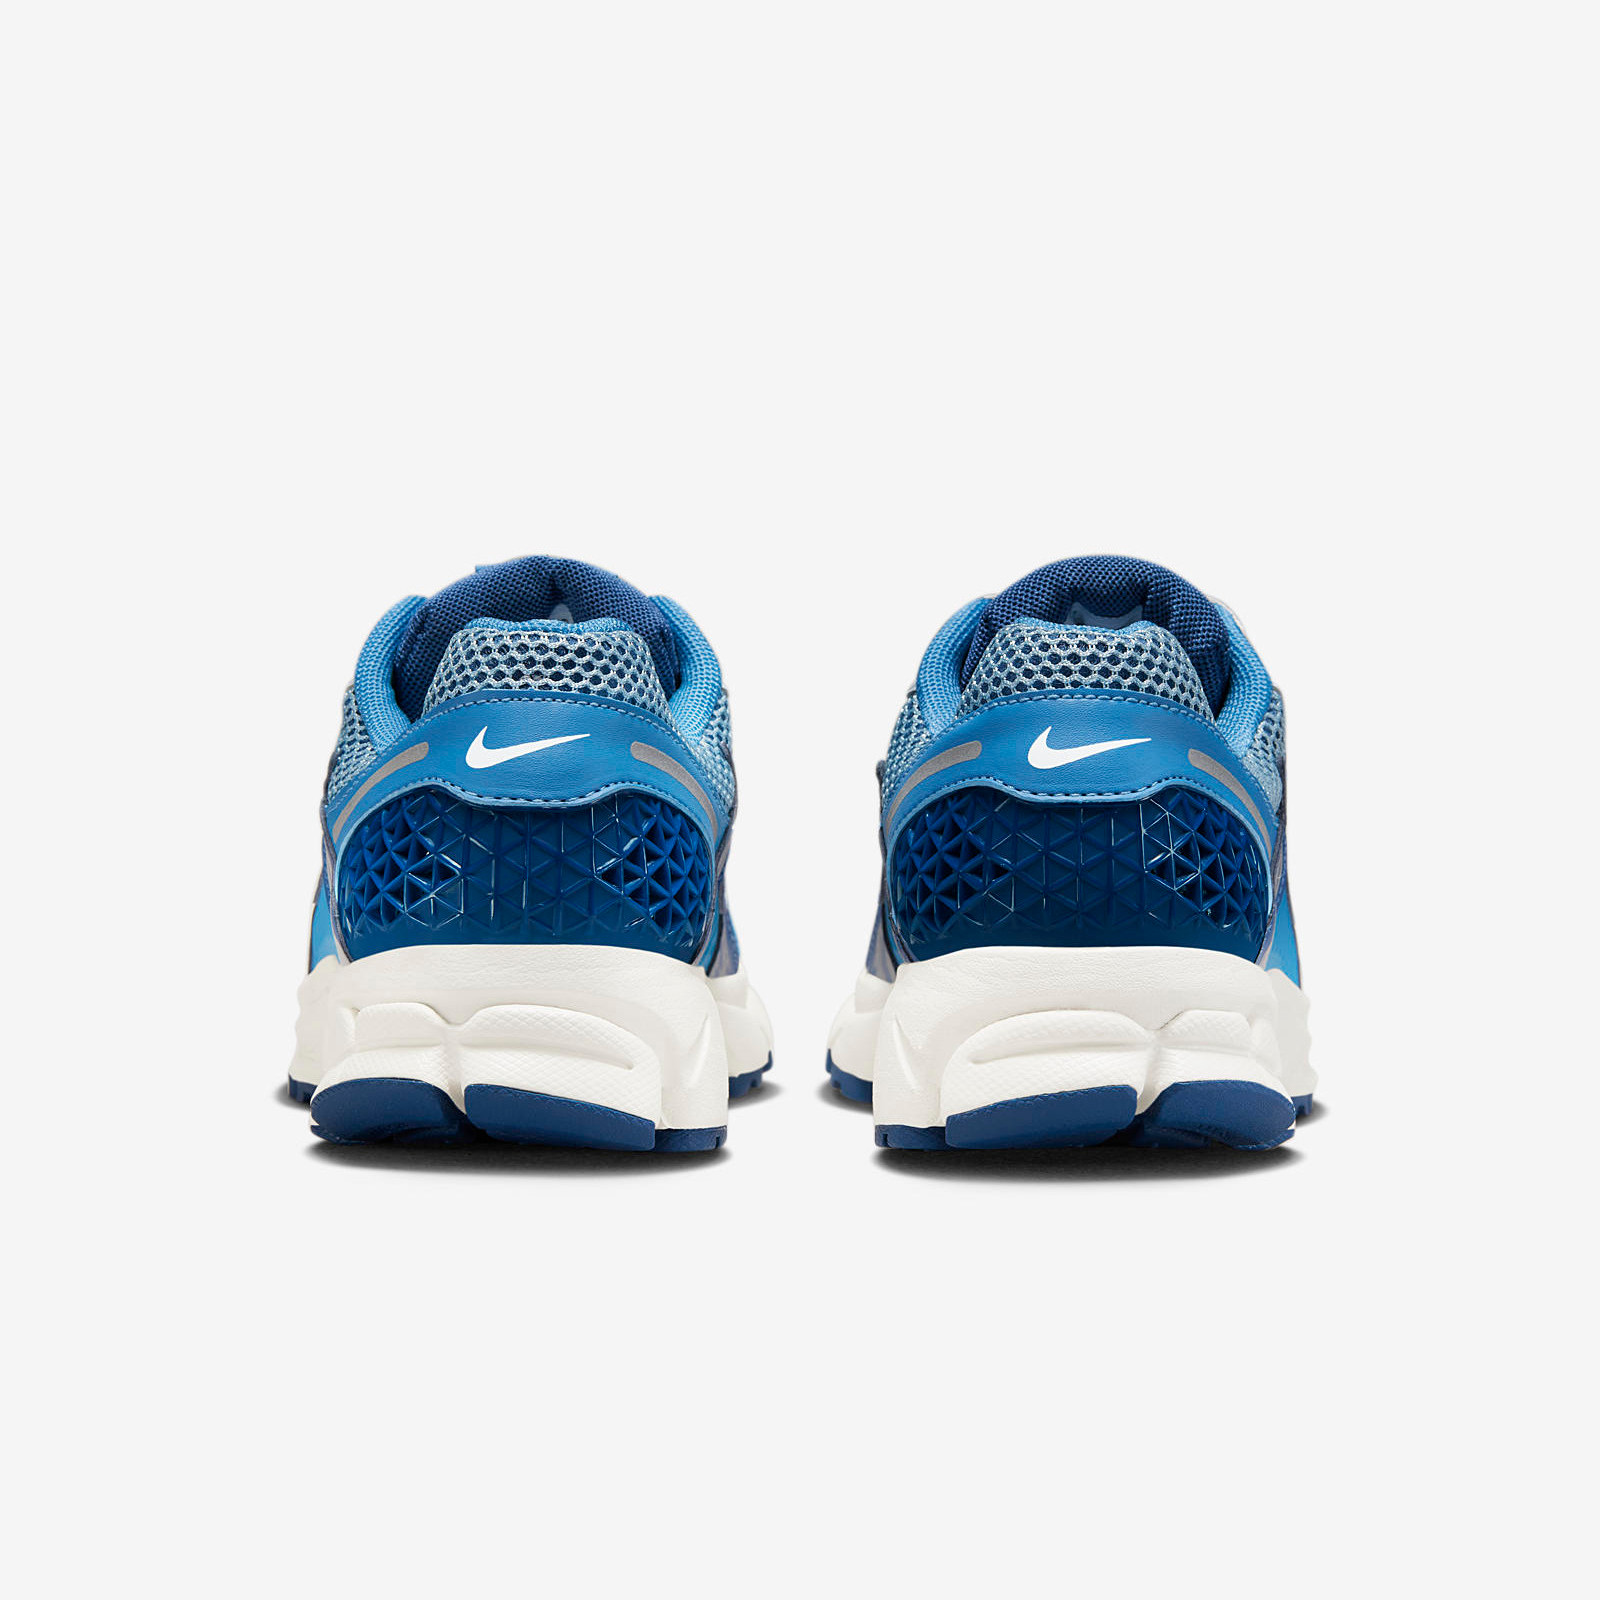 Nike Zoom Vomero 5
Navy / Blue